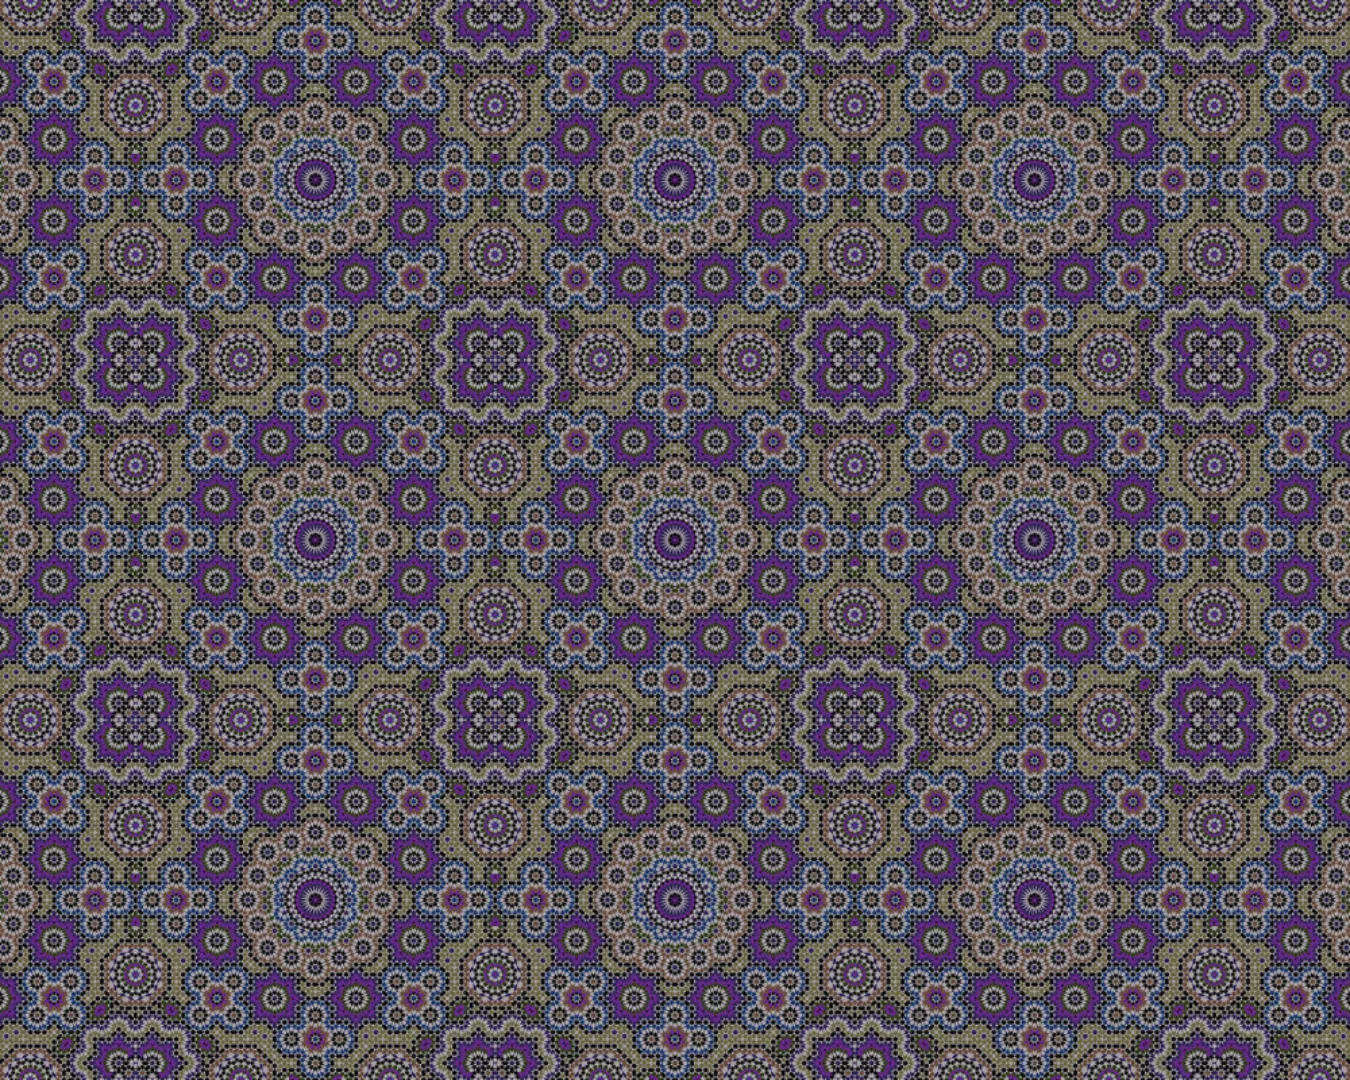 Fototapete "Mosaic III Purple" 4,00x2,50 m / Glattvlies Perlmutt günstig online kaufen